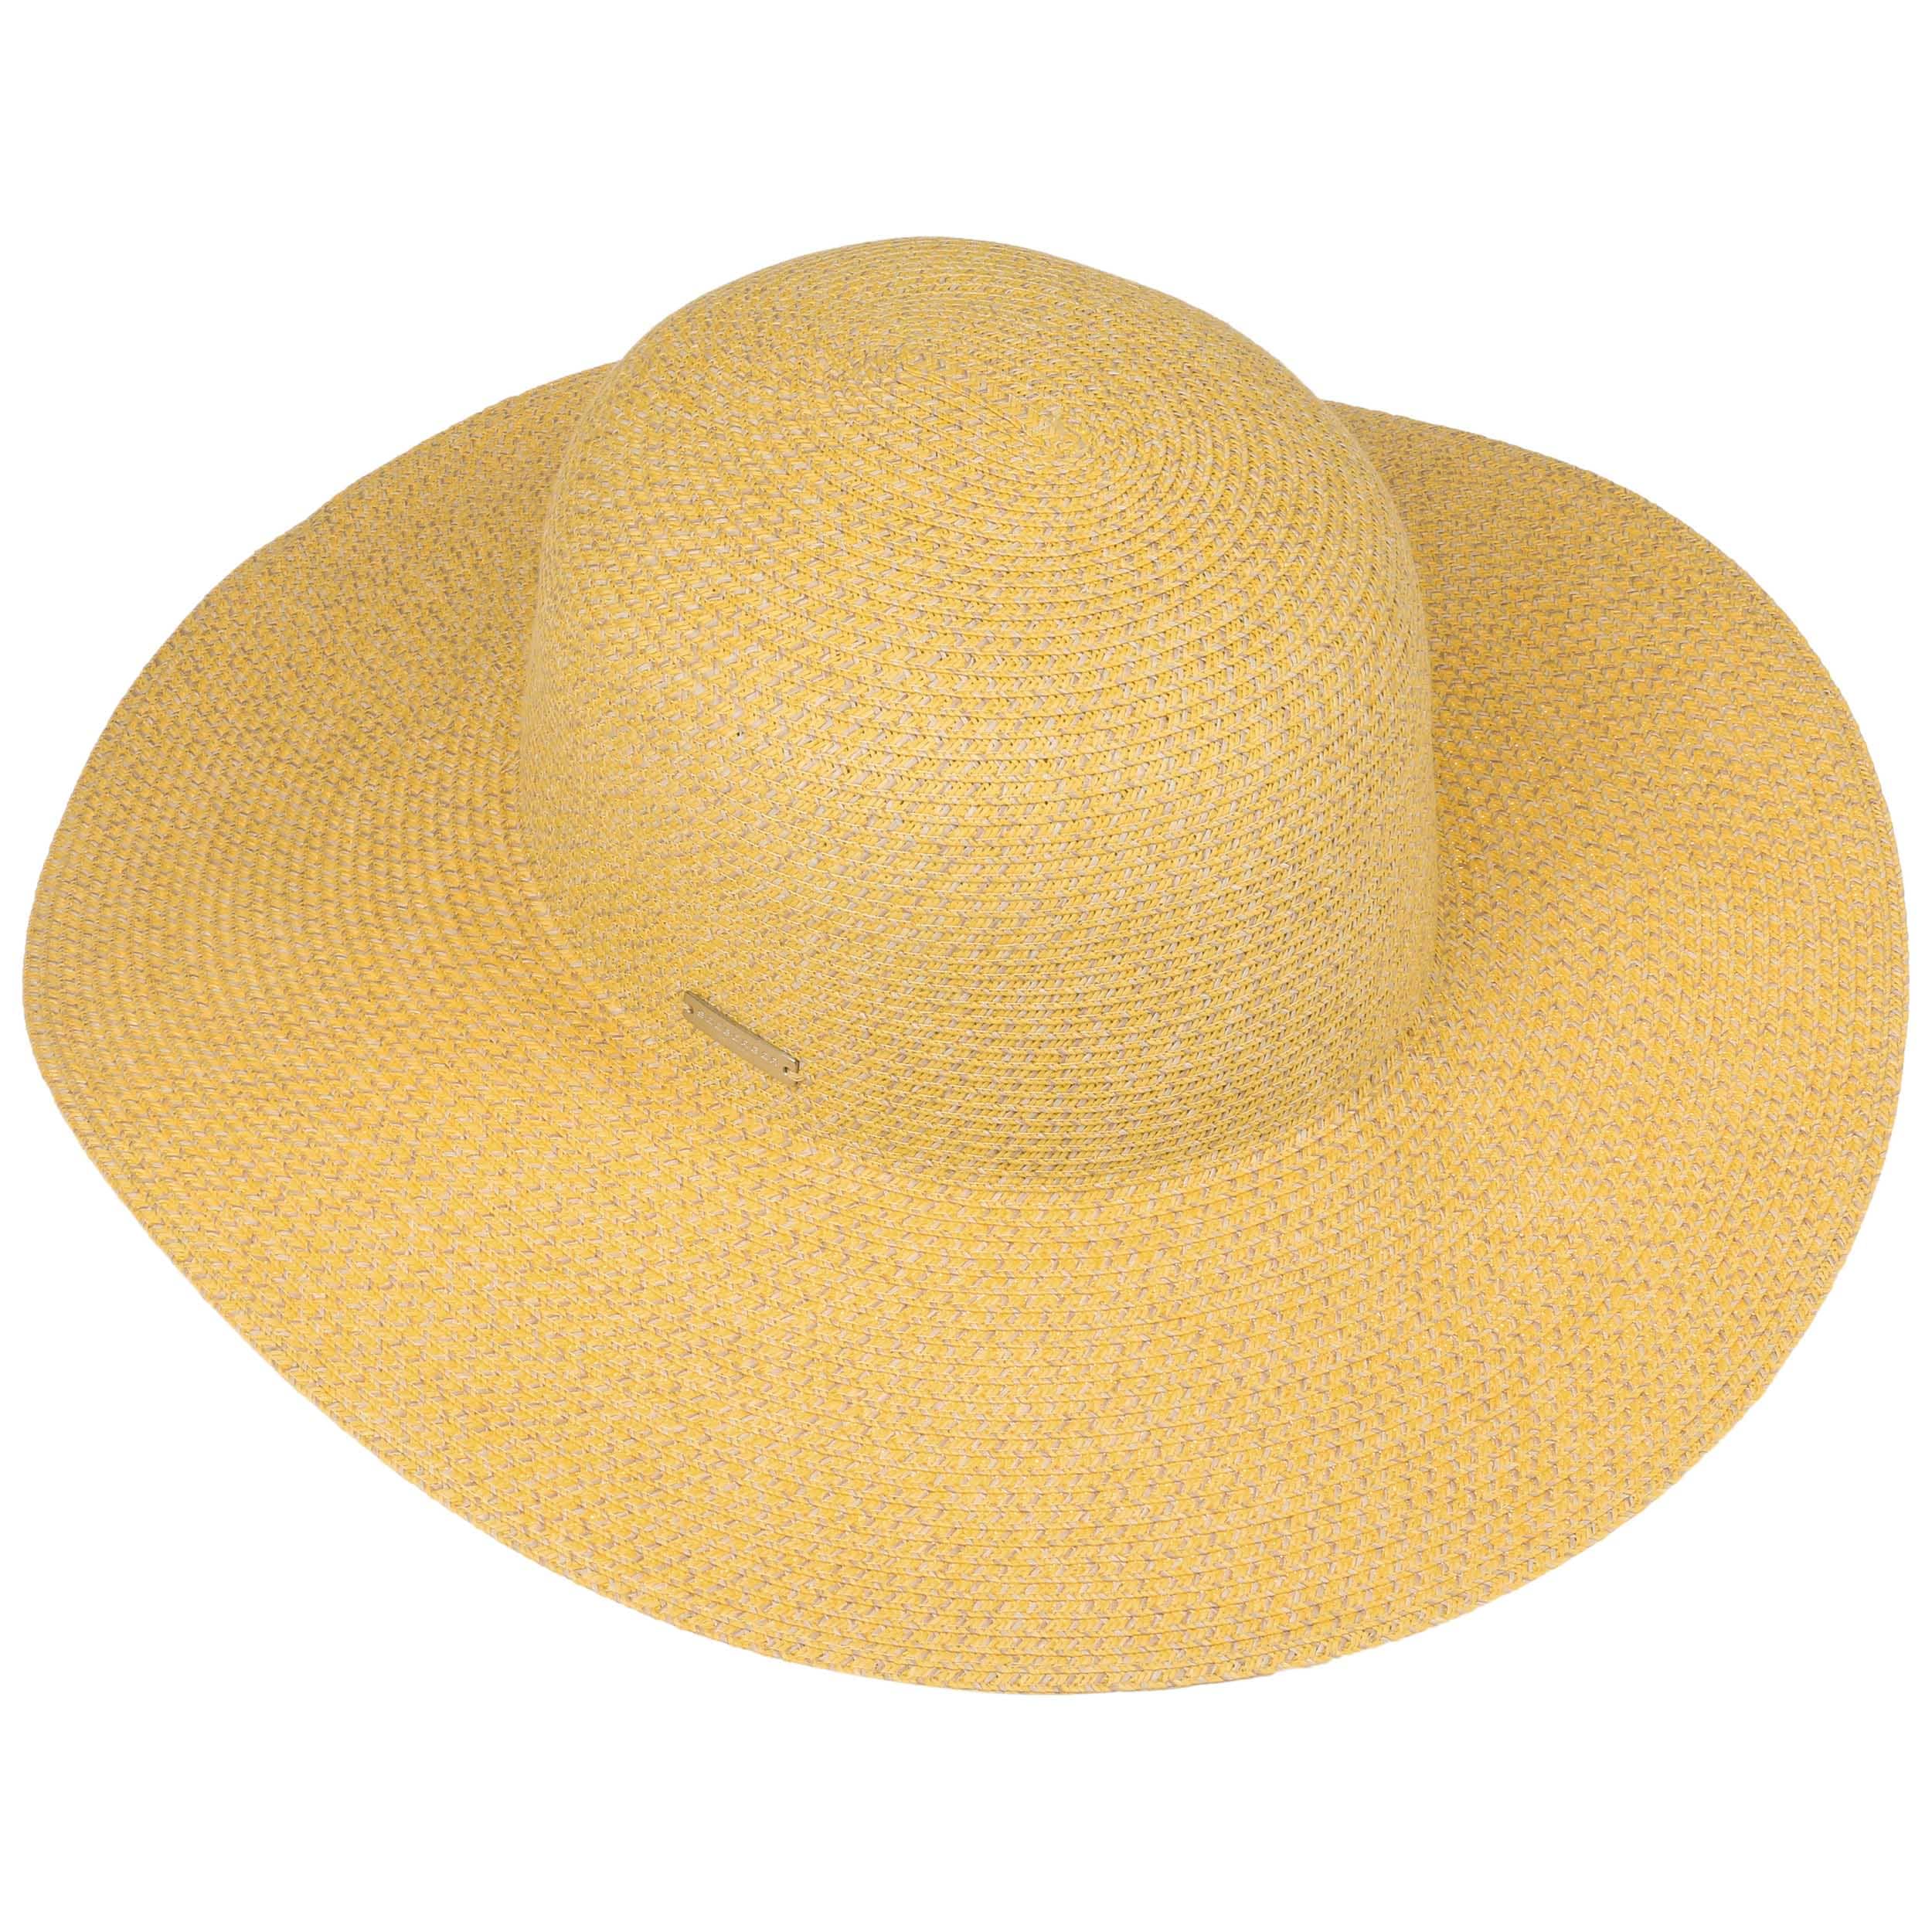 Twotone Mélange Floppy Hat by Seeberger - 53,95